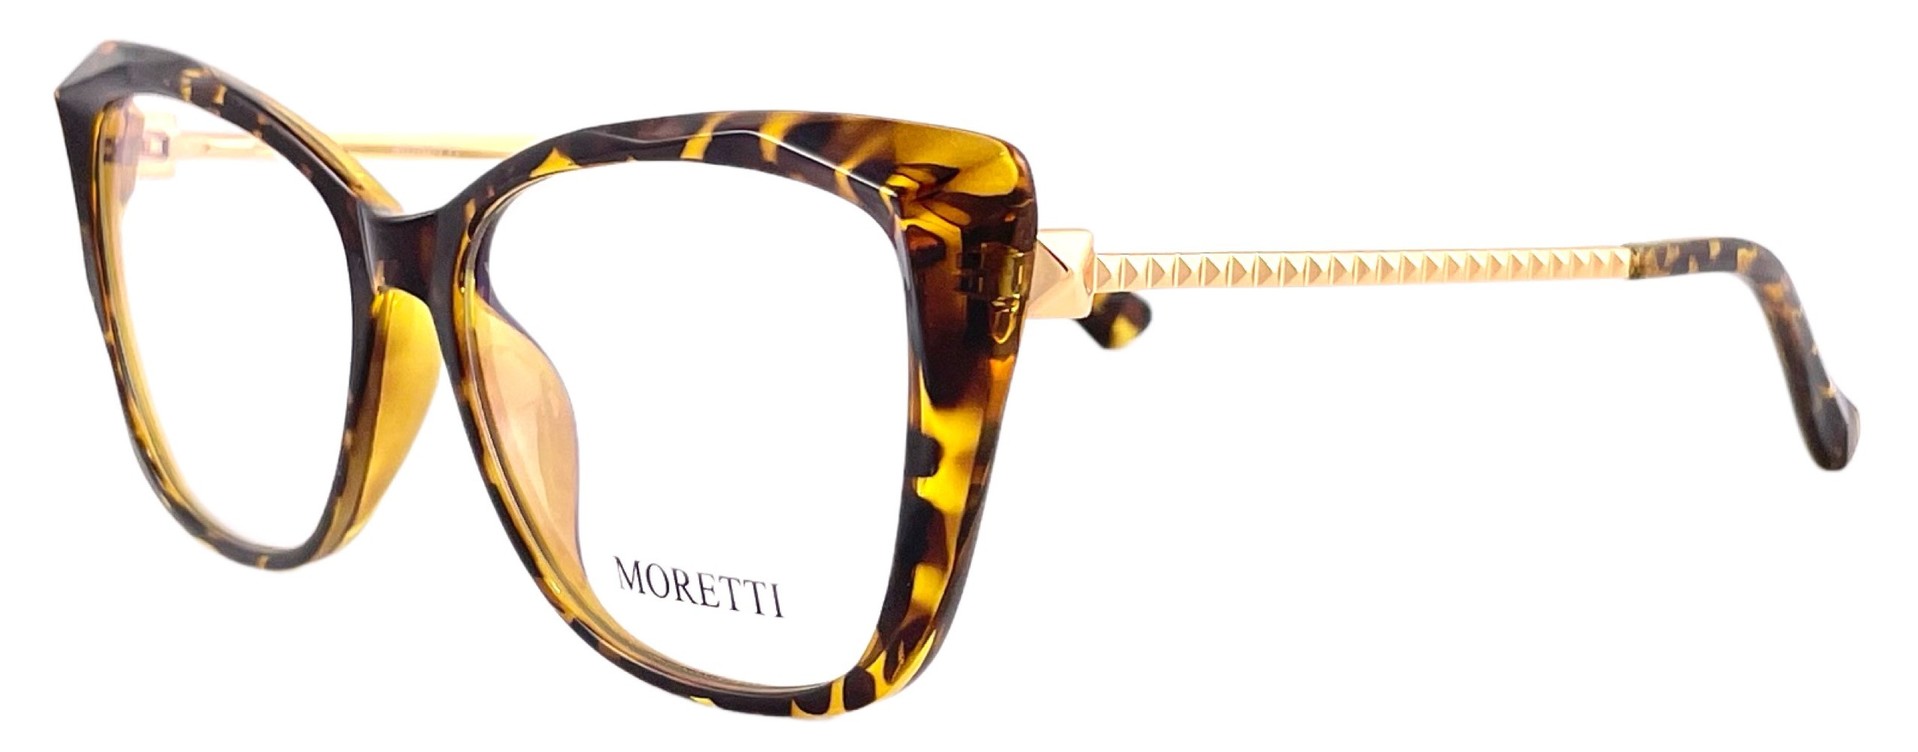 Moretti 2061 C3 2